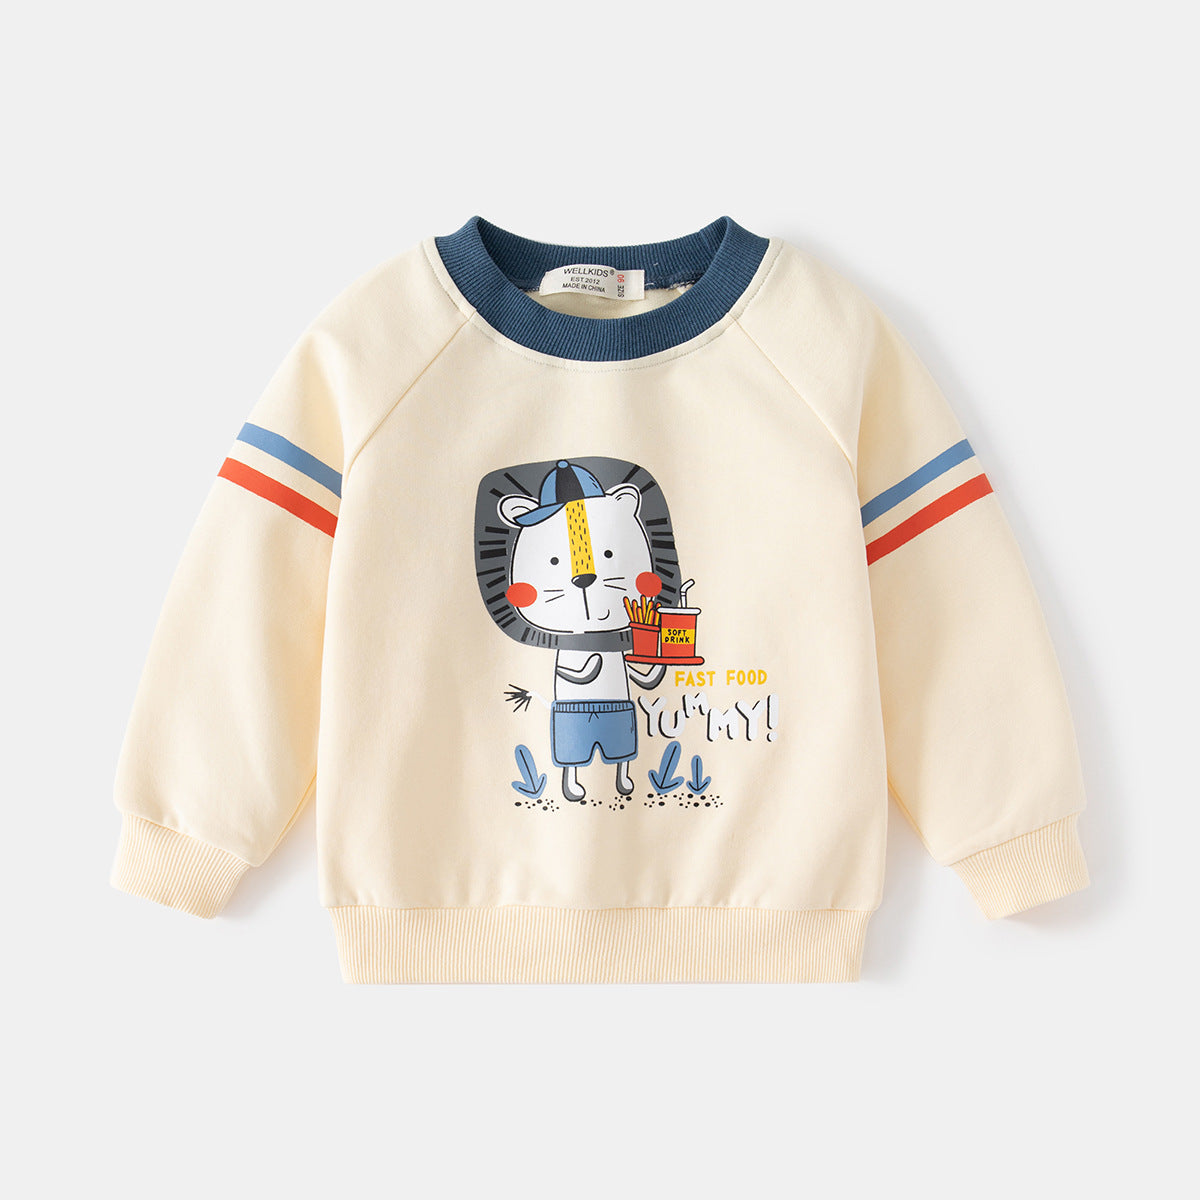 [513643] - Atasan Sweater Crewneck Lengan Panjang Import Anak Laki-Laki - Motif Yummy Food